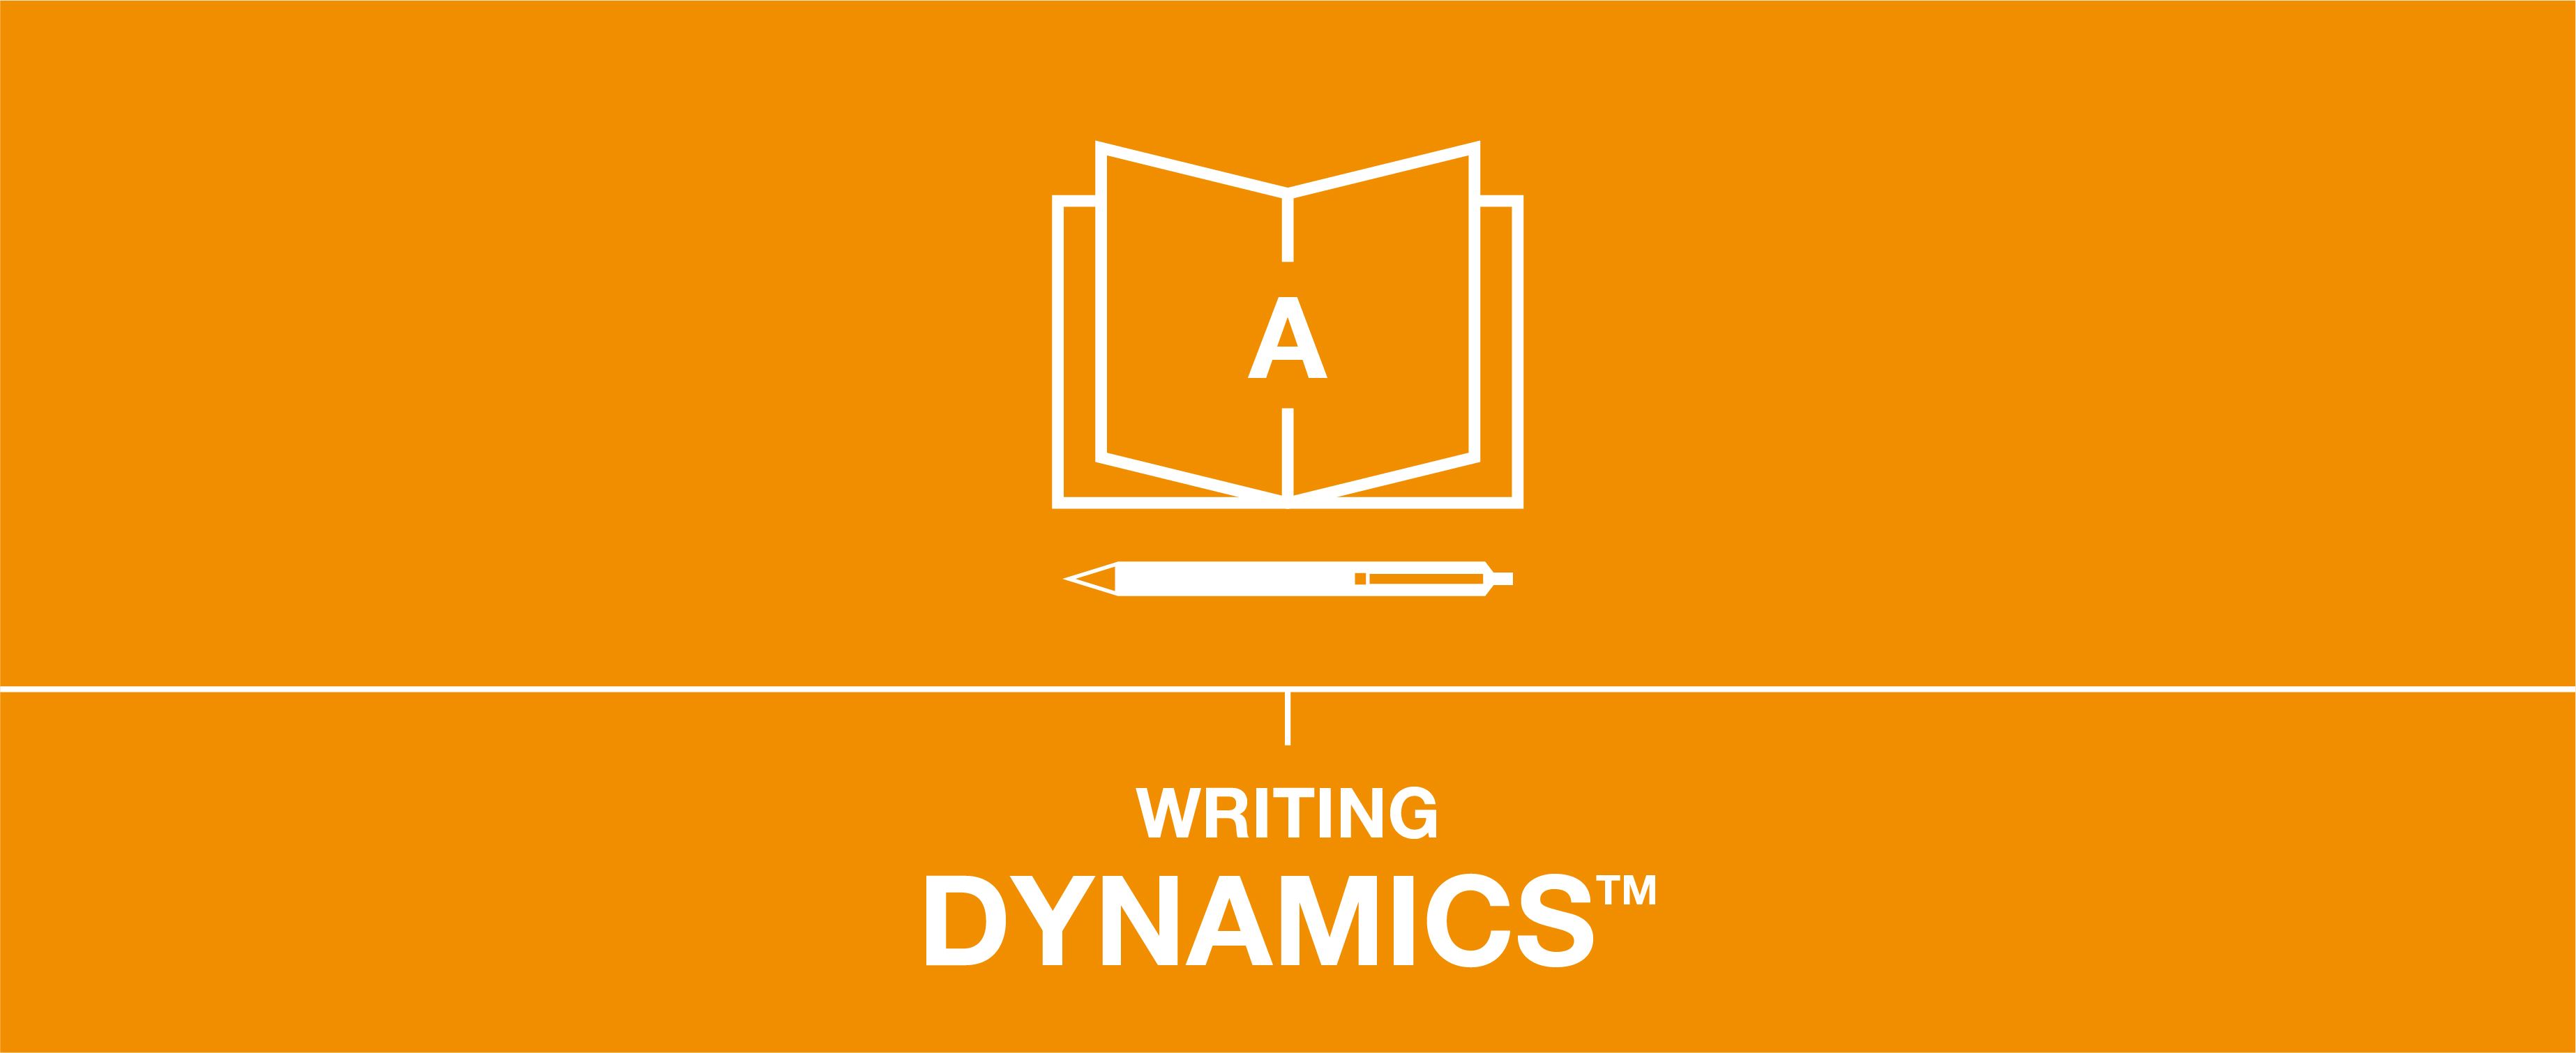 Writing Dynamics